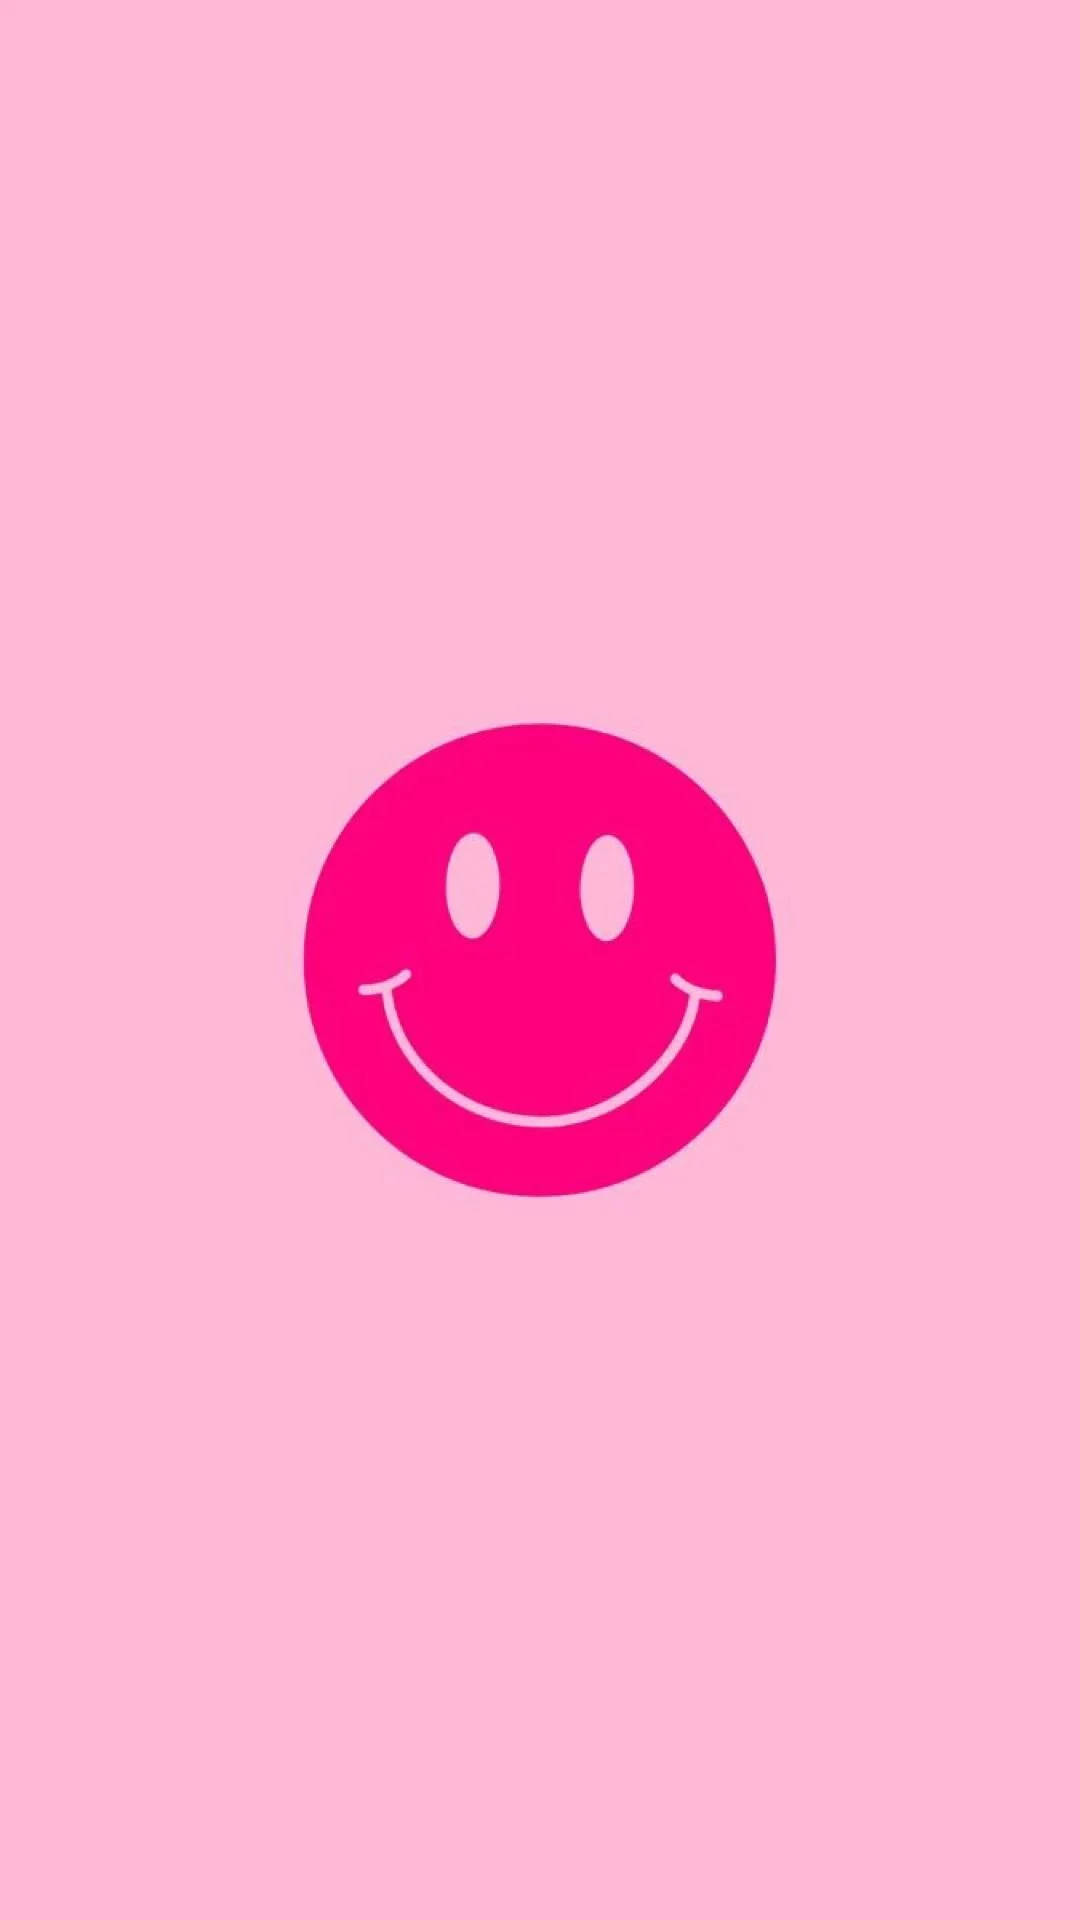 Minimalist Preppy Pink Smiley Face Background